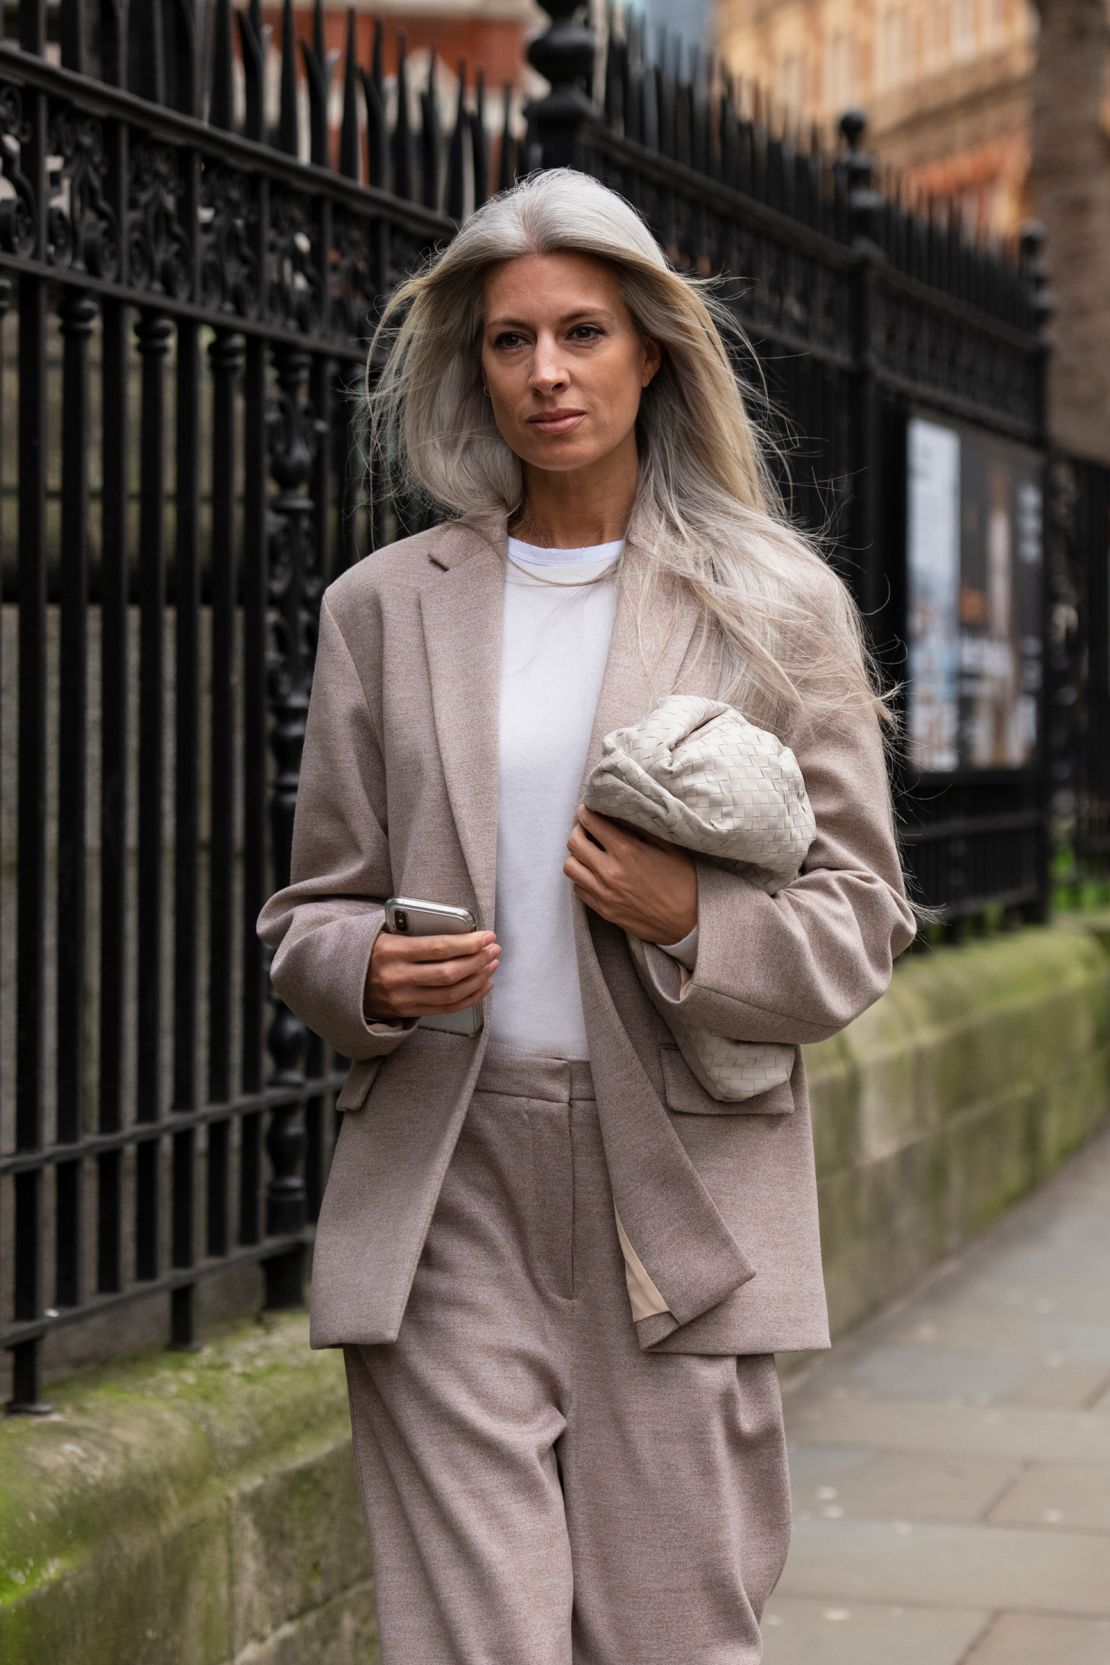 British Vogue's deputy editor Sarah Harris wears a laidback Roksanda Illincic suit during London Fashion Week.